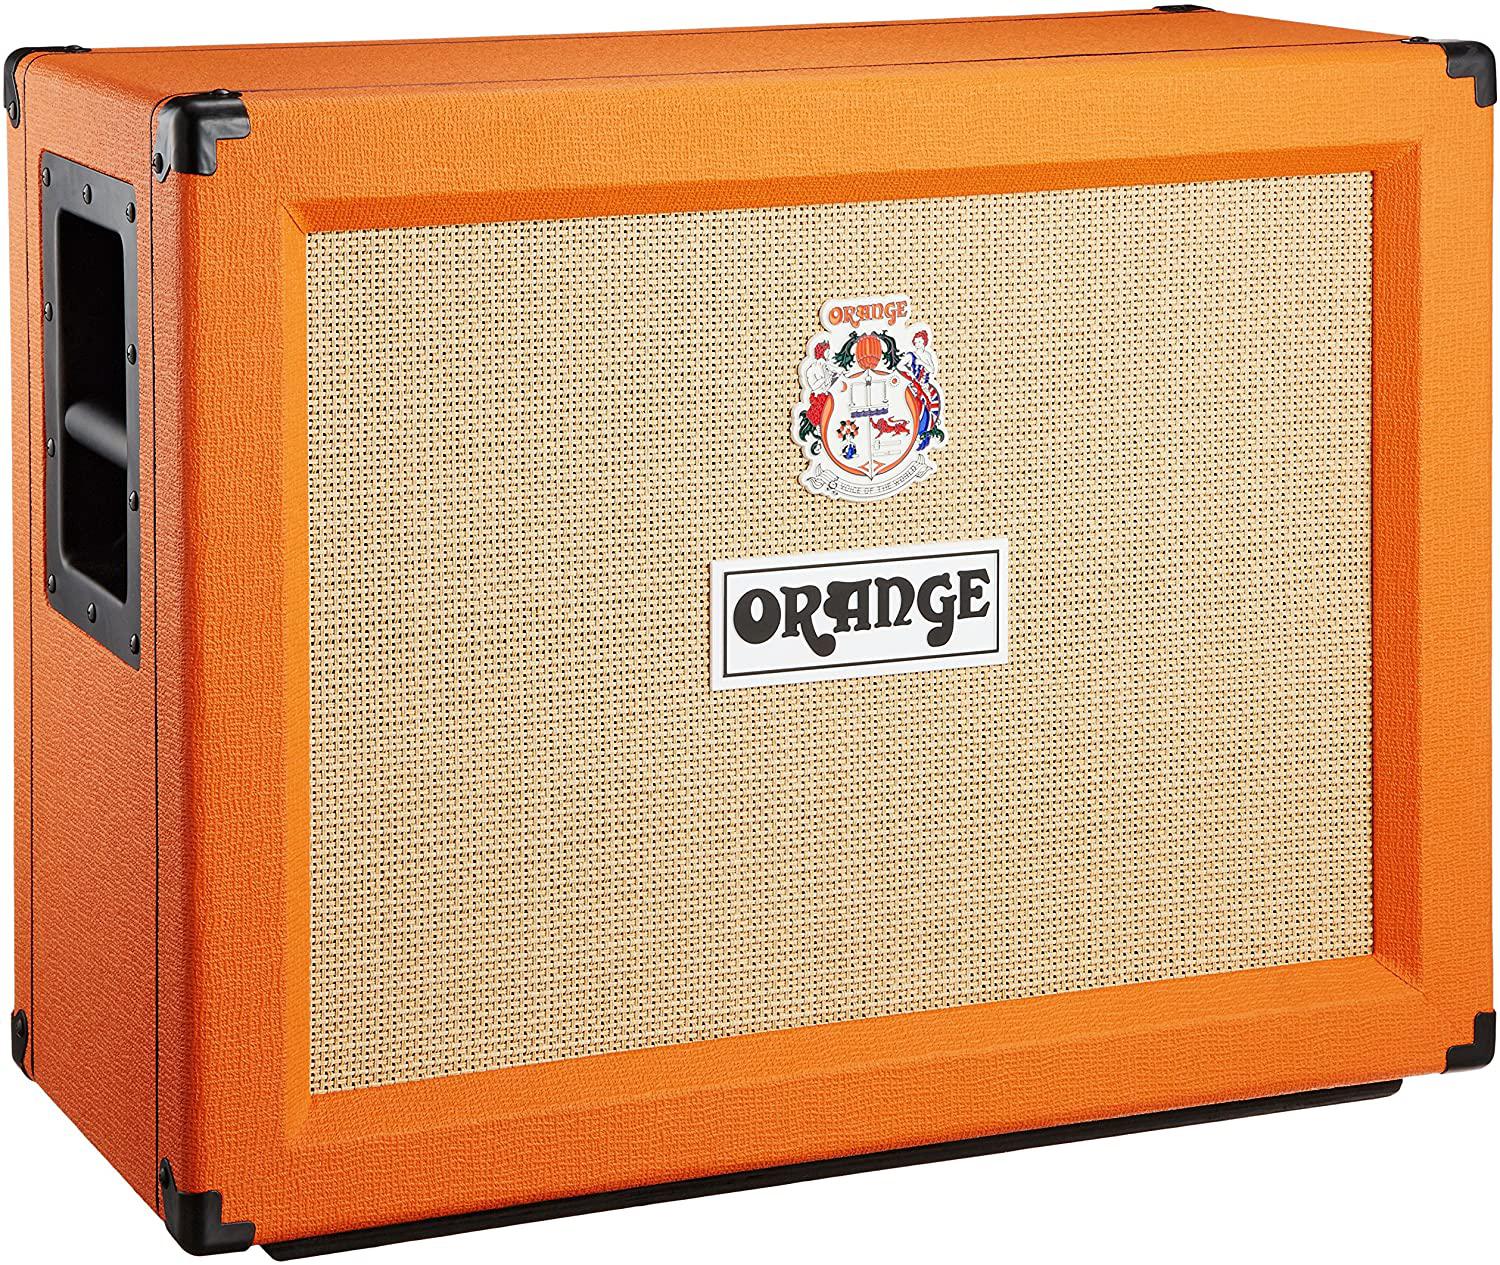 Orange - Bafle para Guitarra Eléctrica, 120 W 2 x 12 Mod.PPC212OB_42